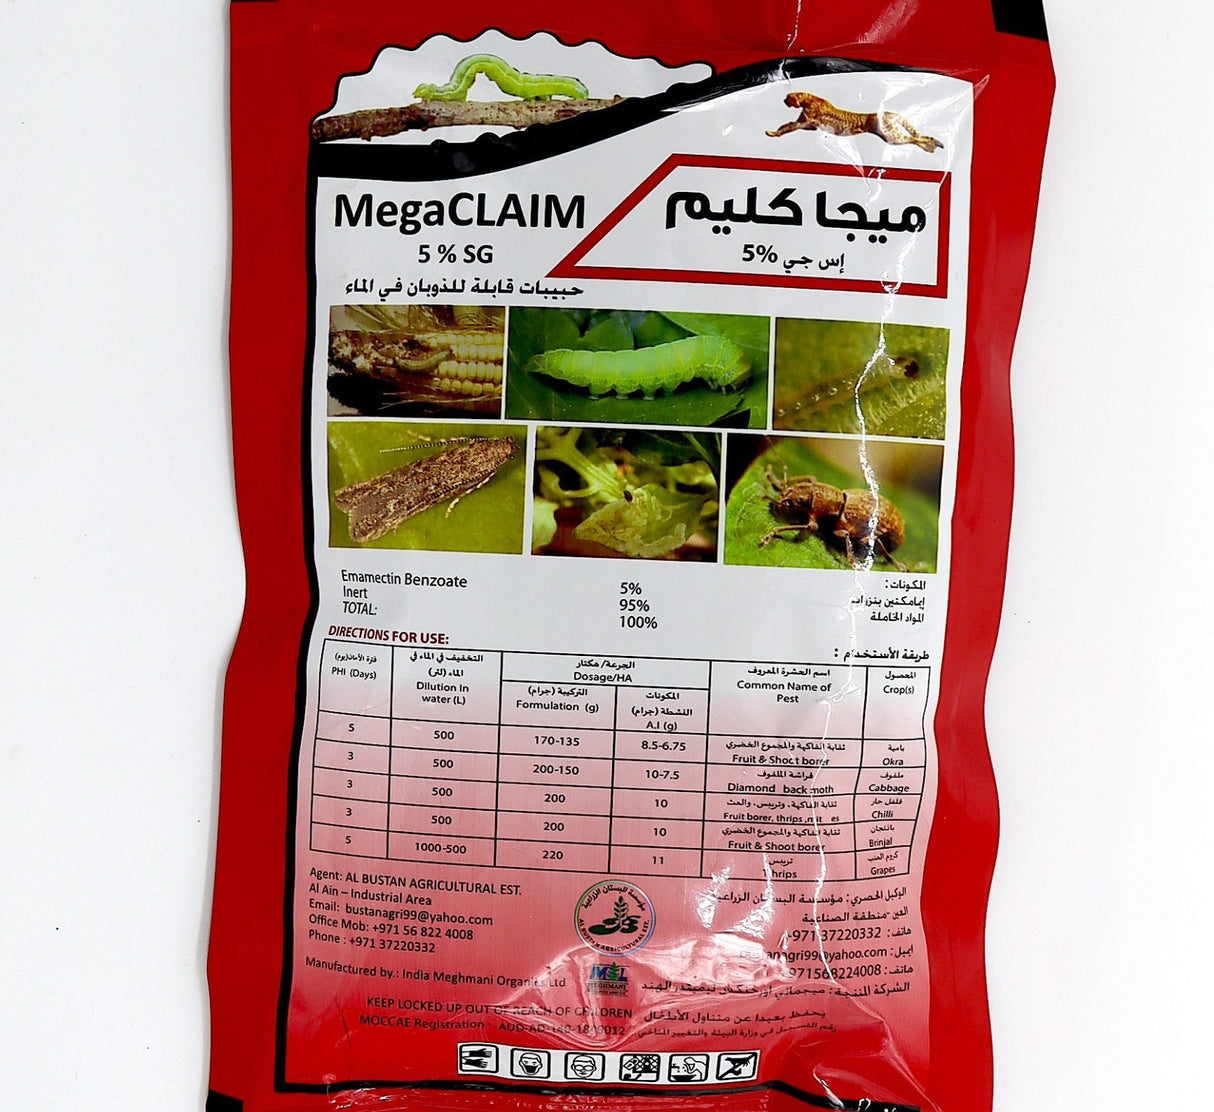 Mega CLAIM 5% SG "Agri Insecticide for Moths, Borer & Thrips"